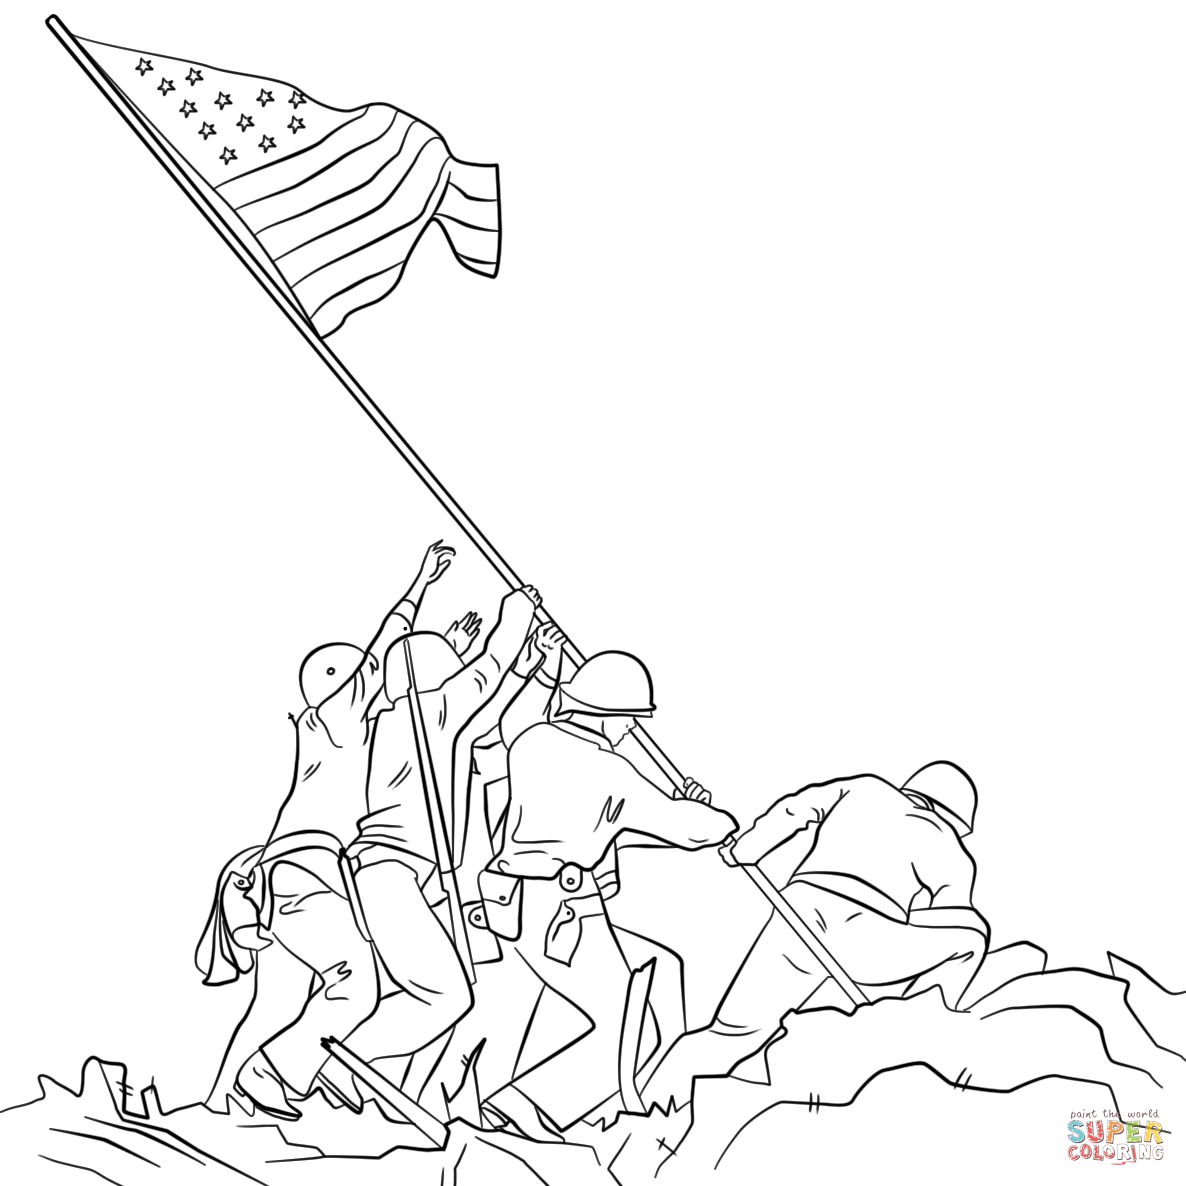 Raising the Flag on Iwo Jima coloring page | Free Printable ...